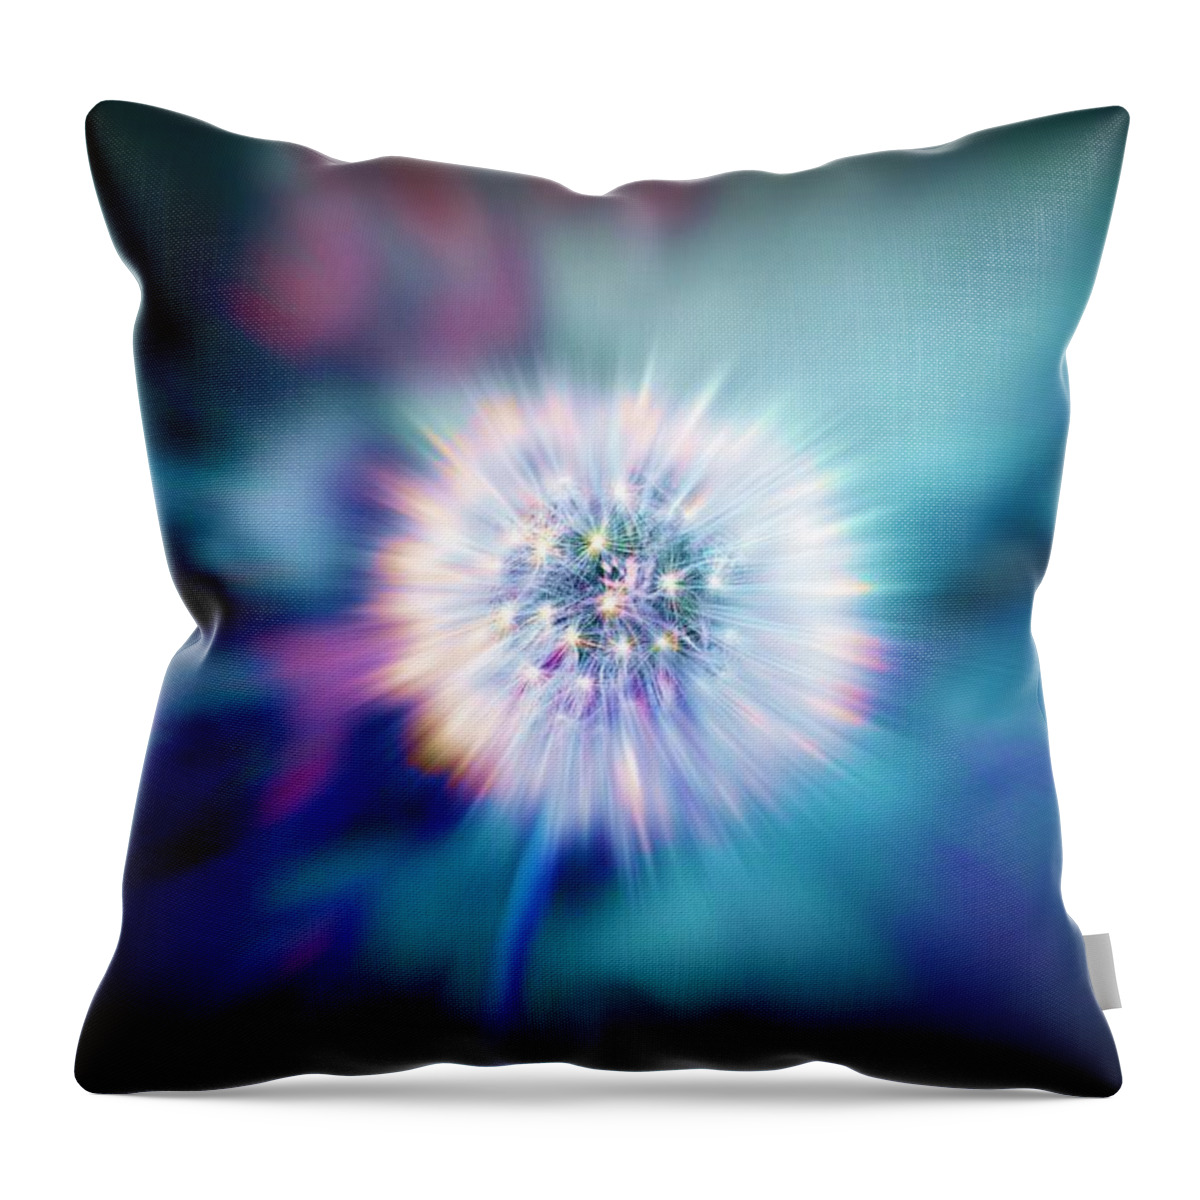 Dandelion Throw Pillow featuring the digital art Dandelion Glow by Lilia D